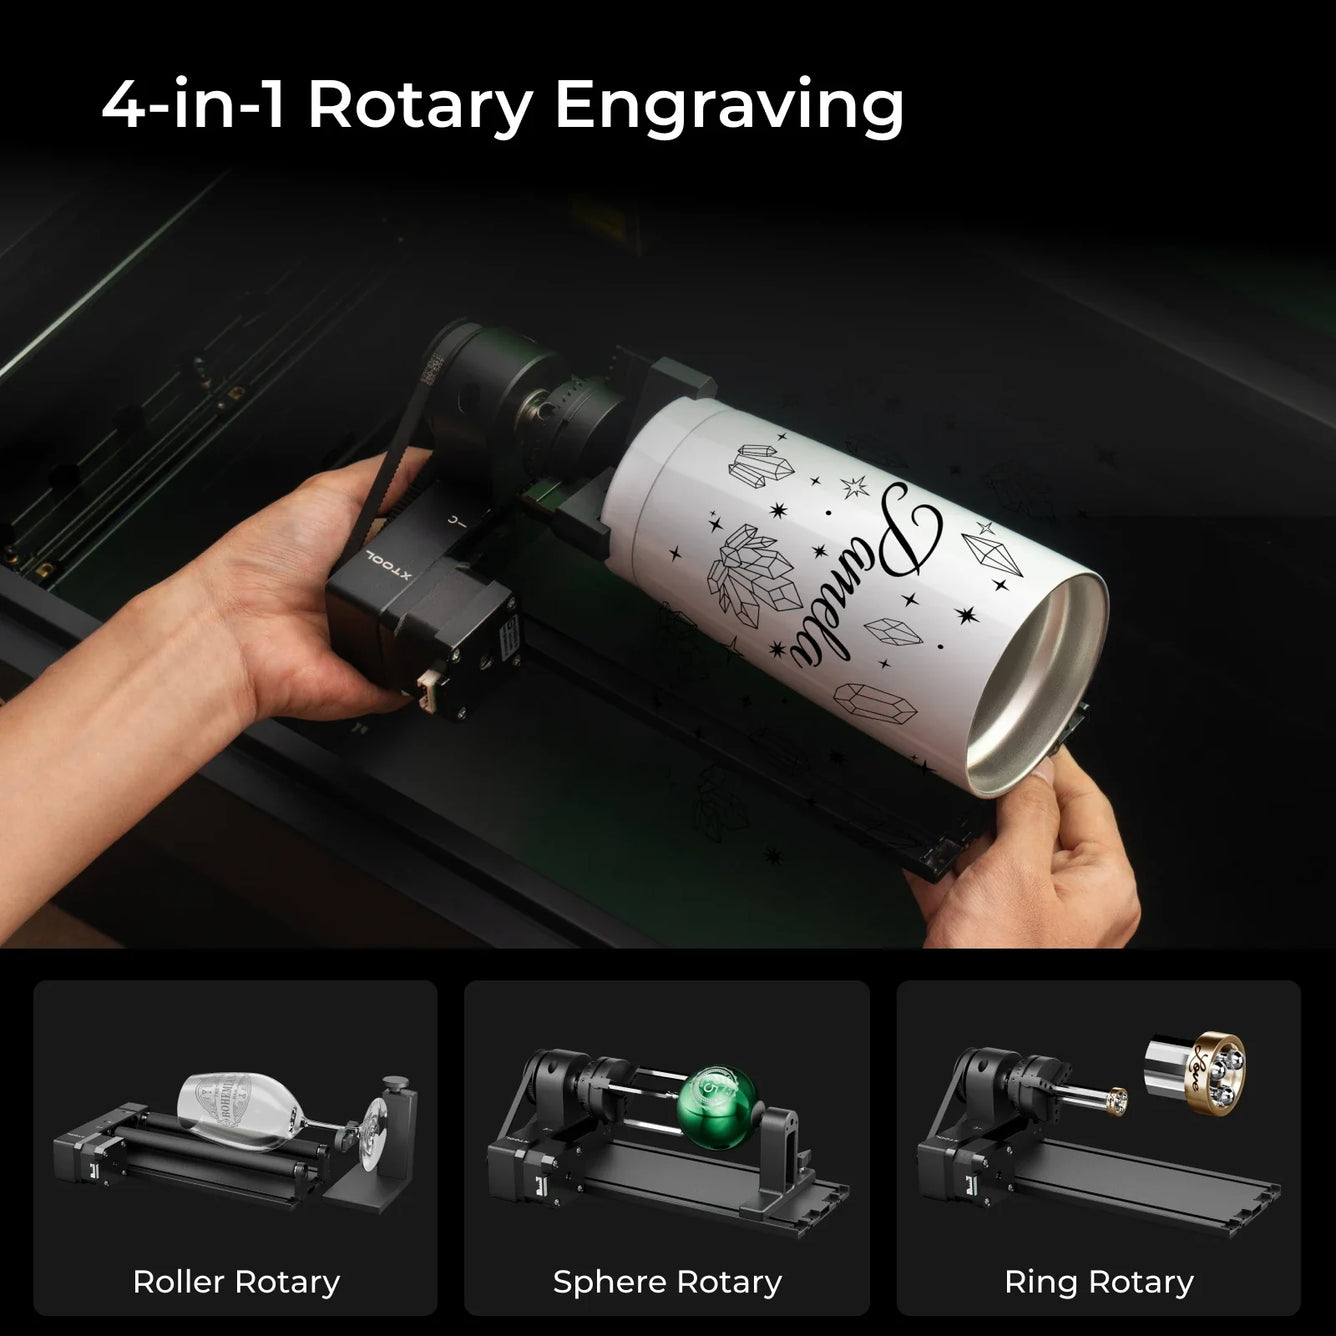 xTool D1 Pro Laser Engraver Boasts Powerful Improvements (Ad)